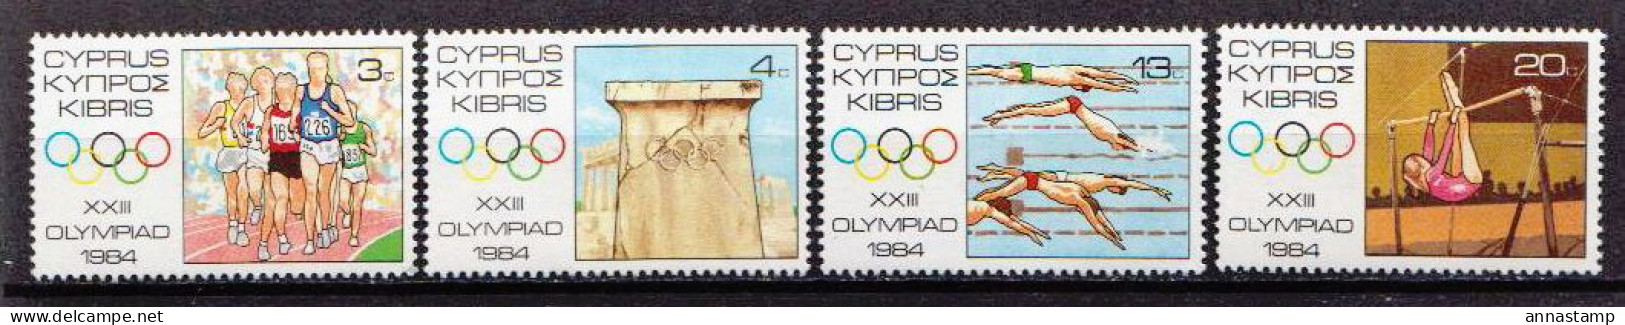 Cyprus MNH Set - Summer 1984: Los Angeles